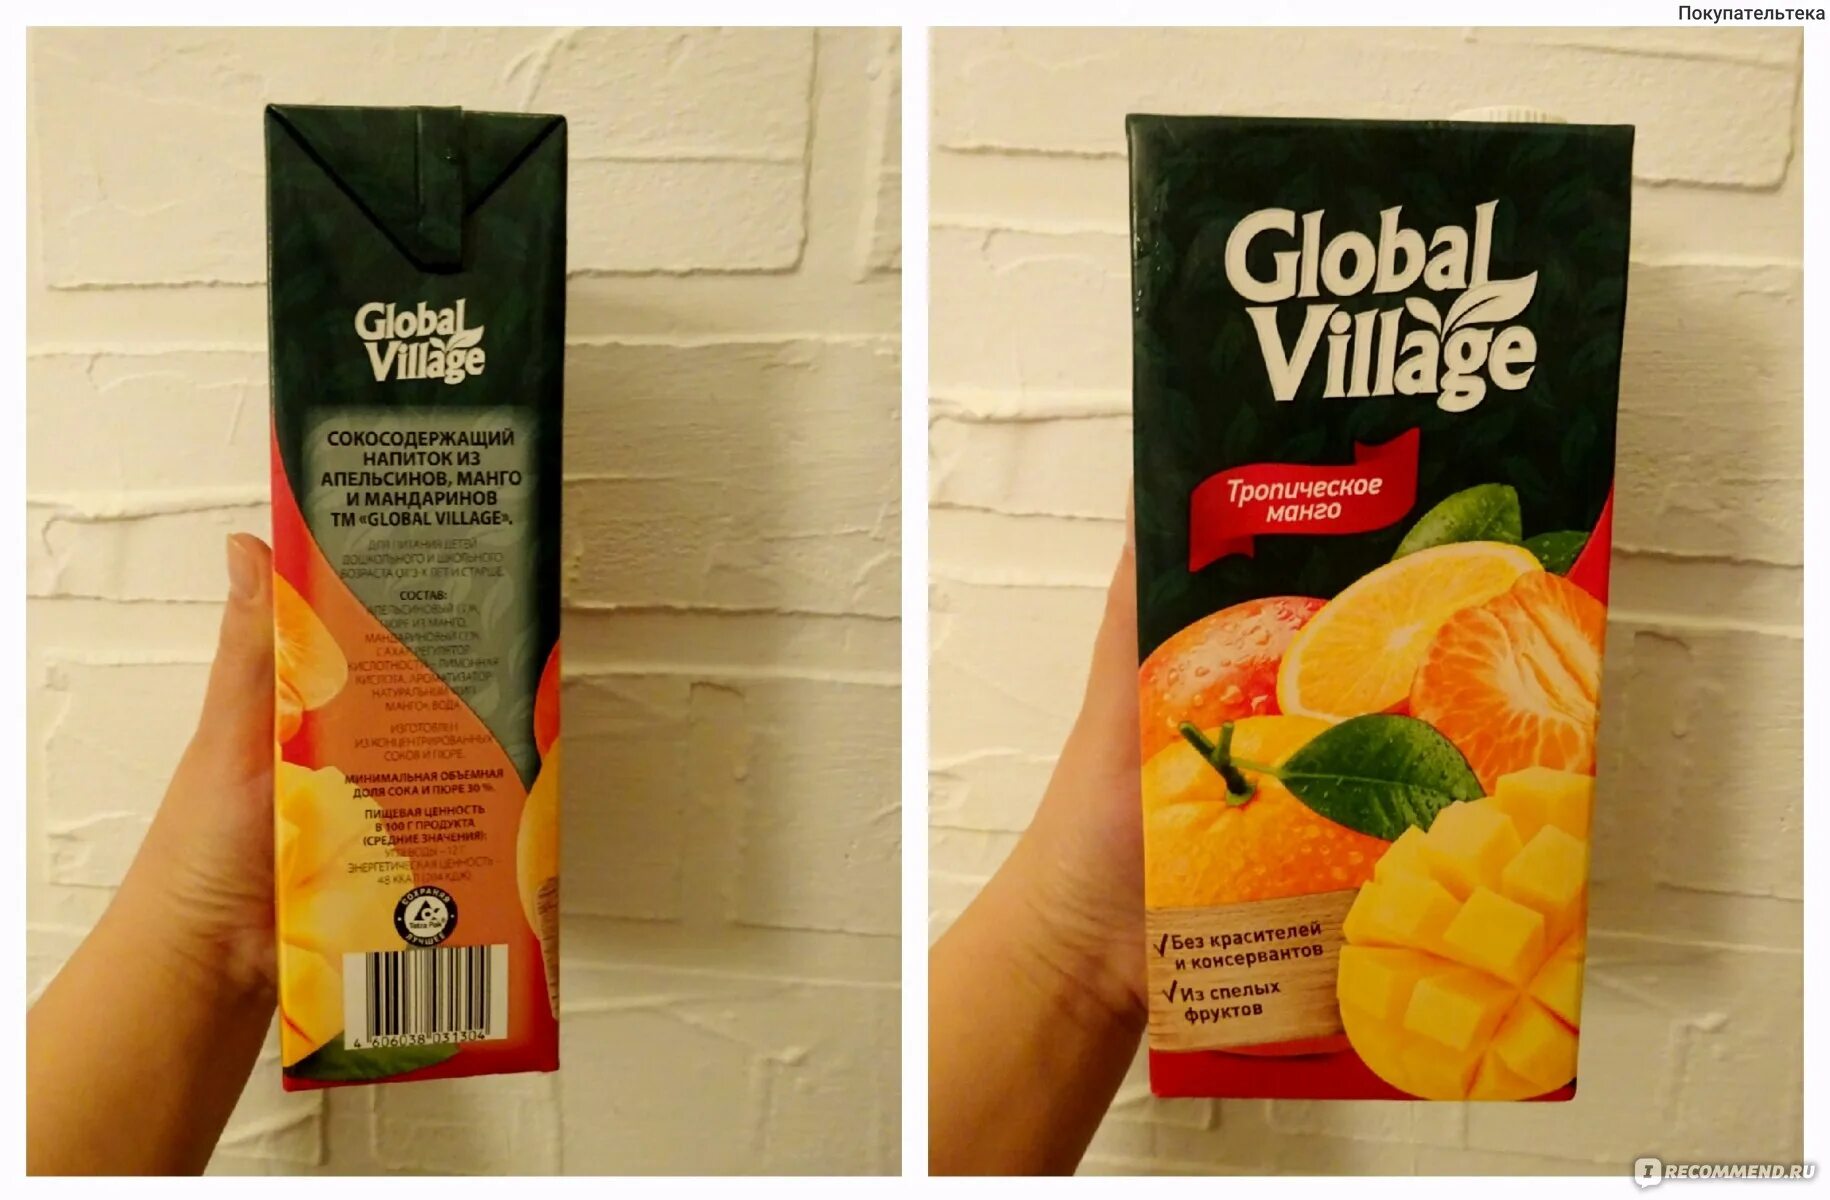 Global village чья. Сок Global Village тропический микс. Сок Глобал Виладж манго. Сокосодержащий напиток Global Village. Тропический манго сок Глобал.